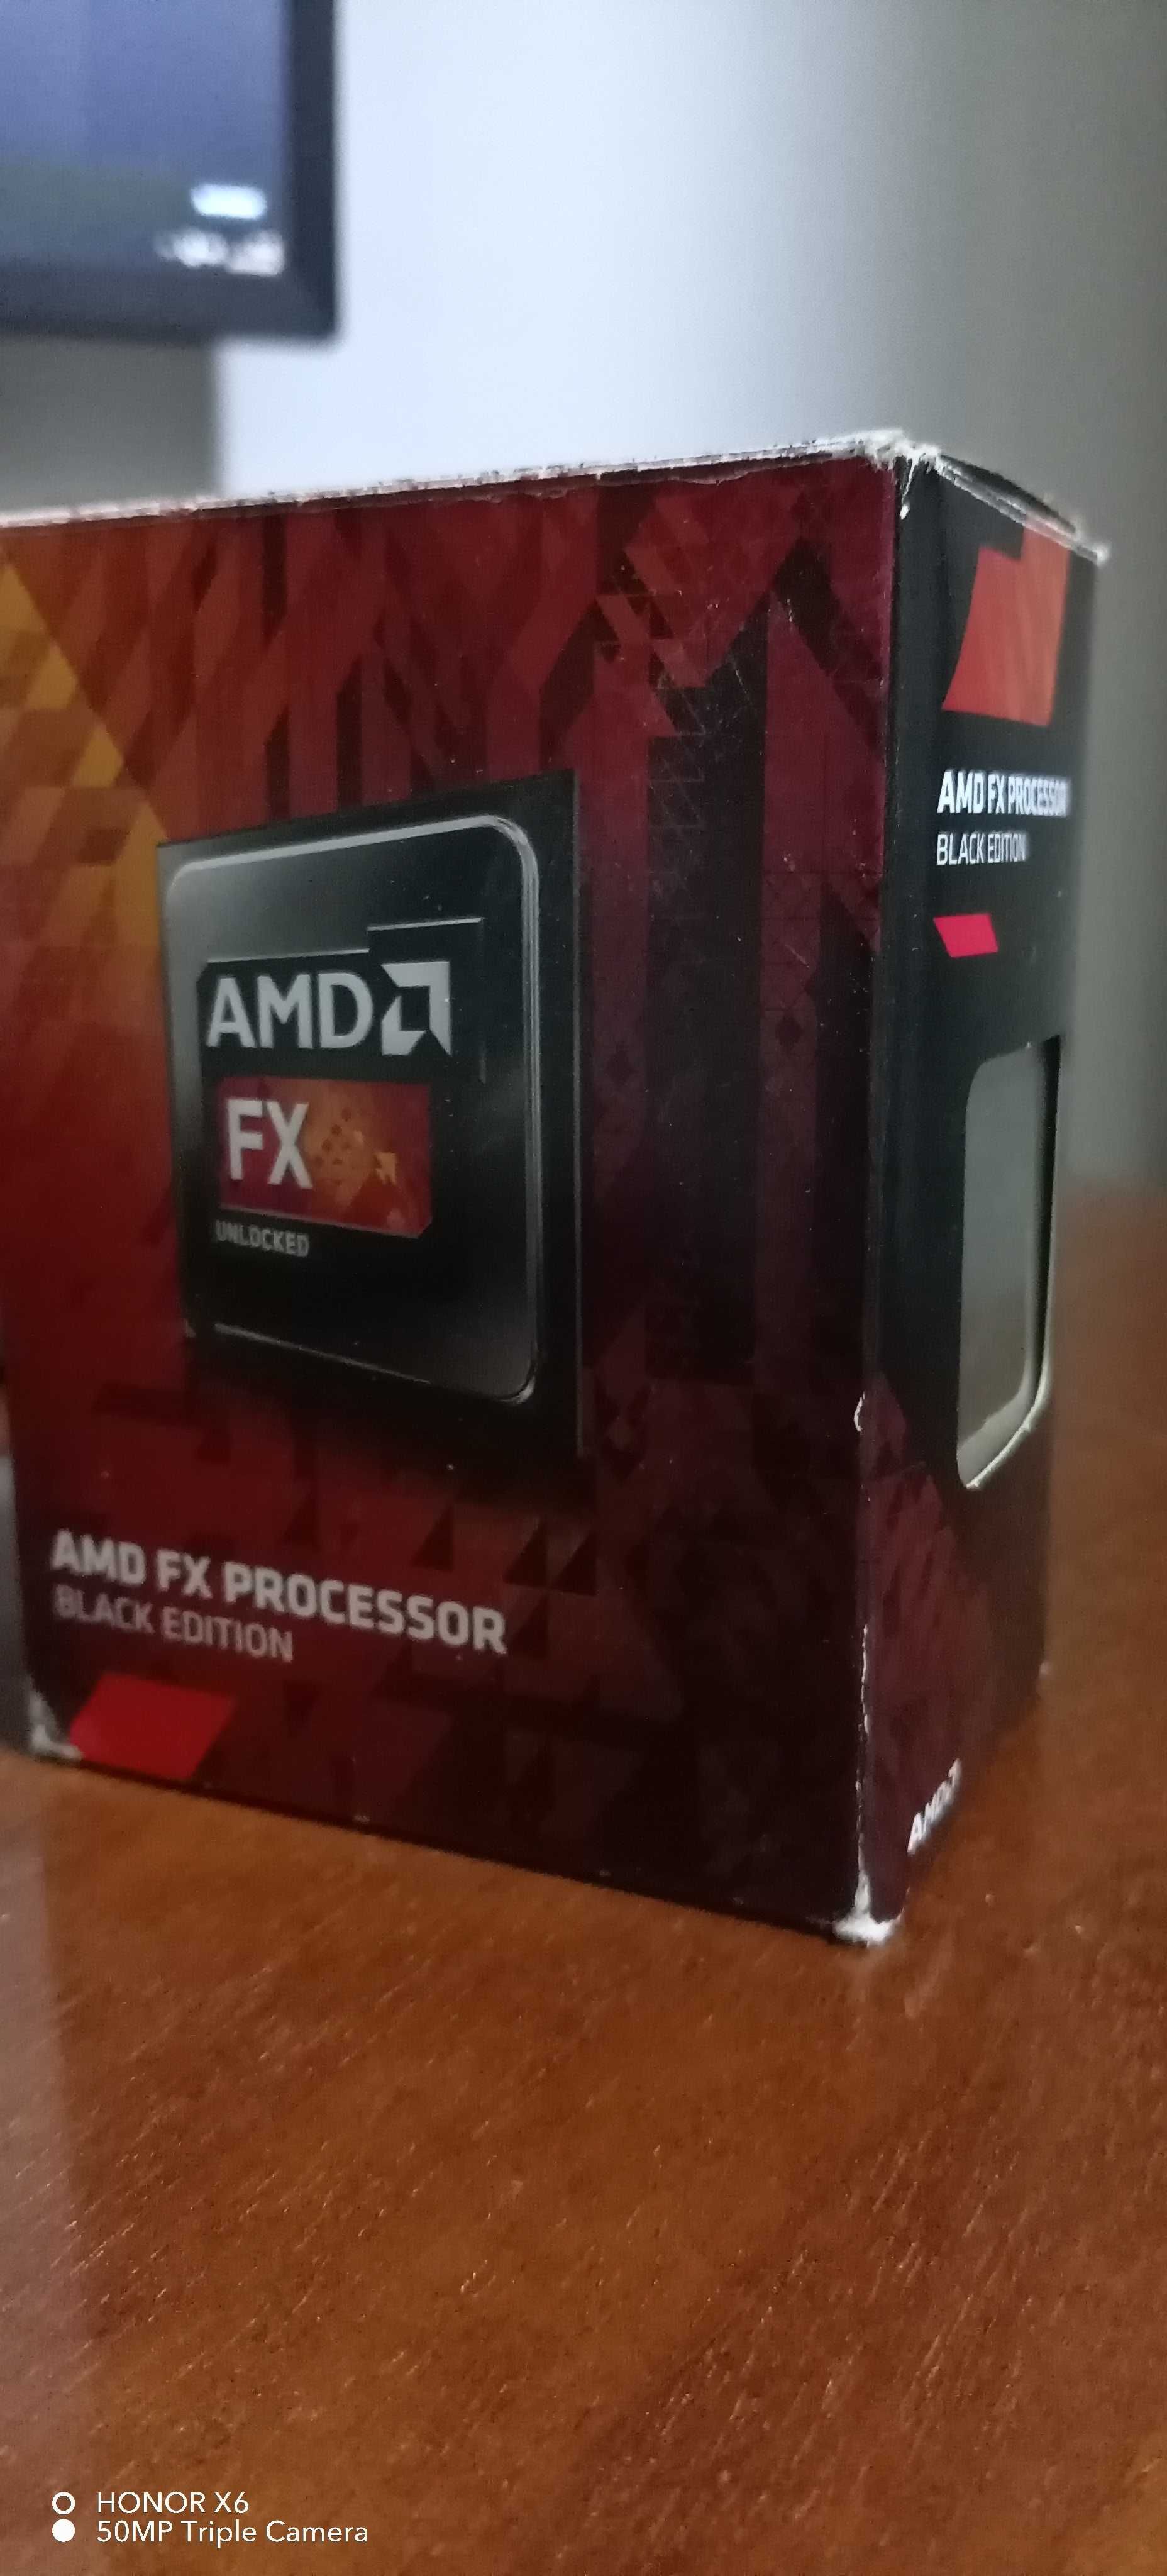 Amd fx procesor + cooler